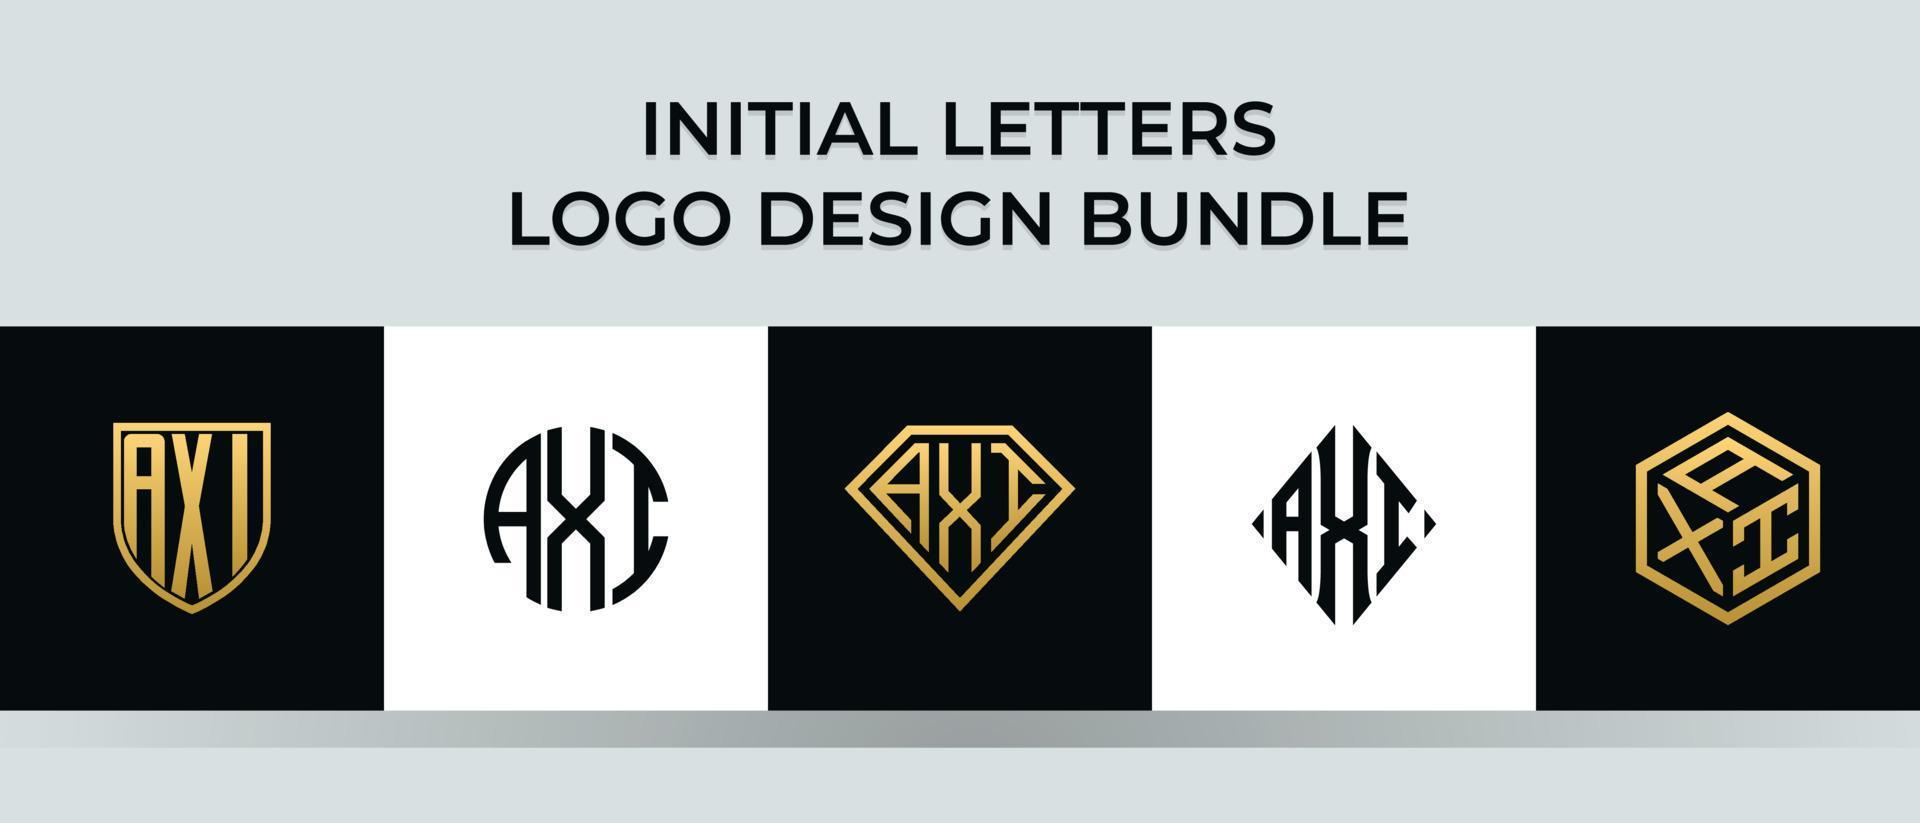 Initial letters AXI logo designs Bundle vector